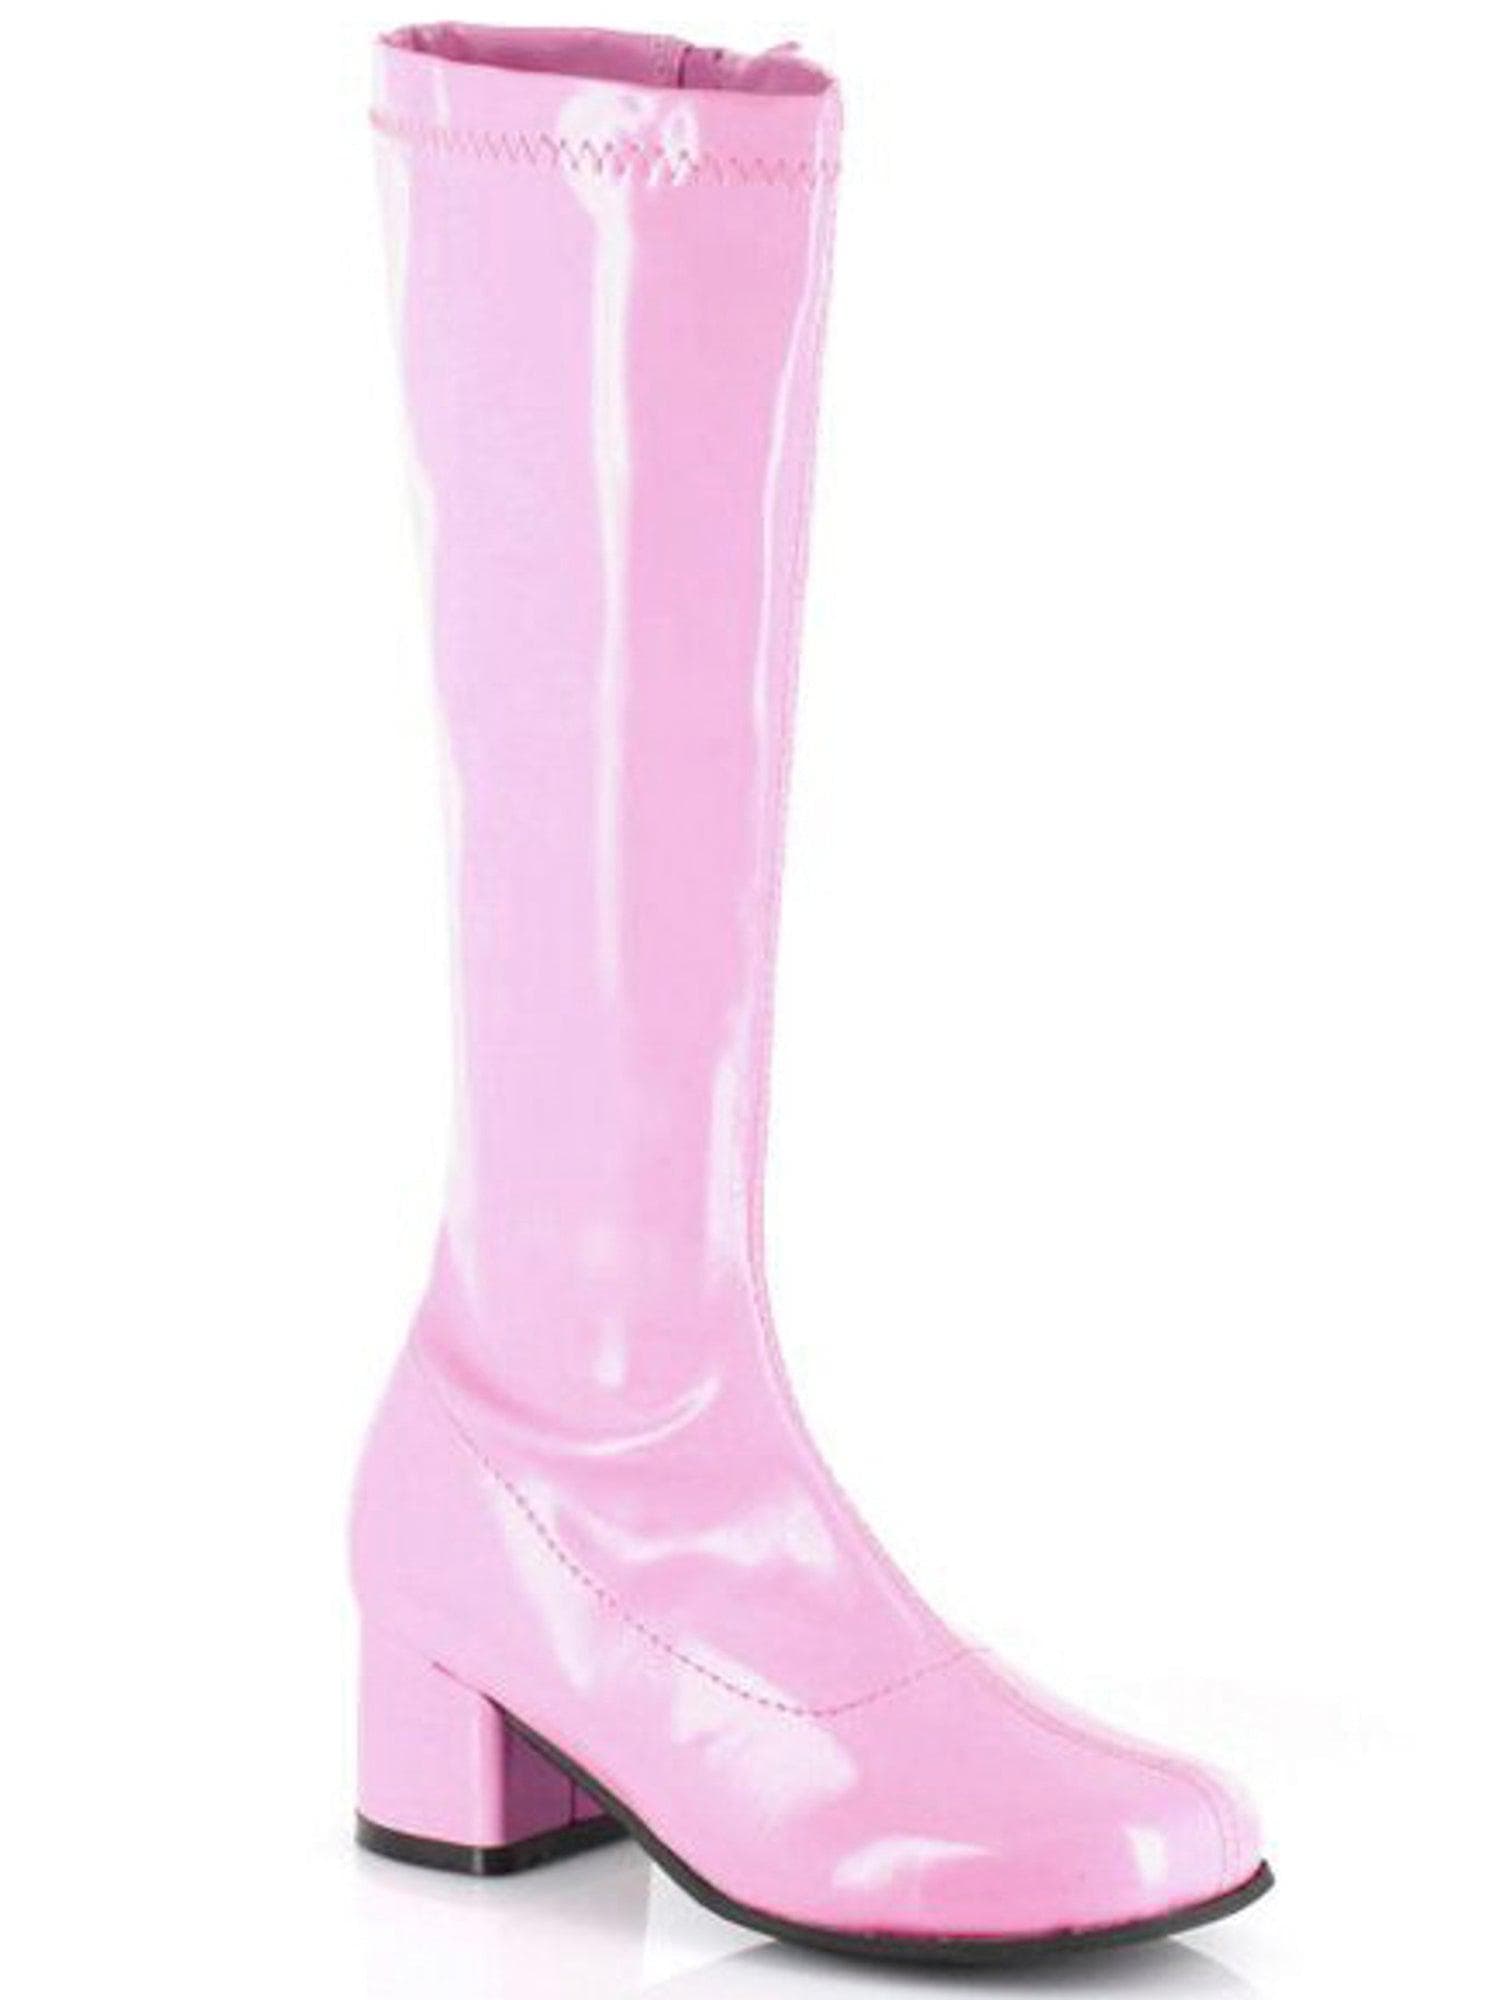 Kids Pink Patent Go Go Boots - costumes.com